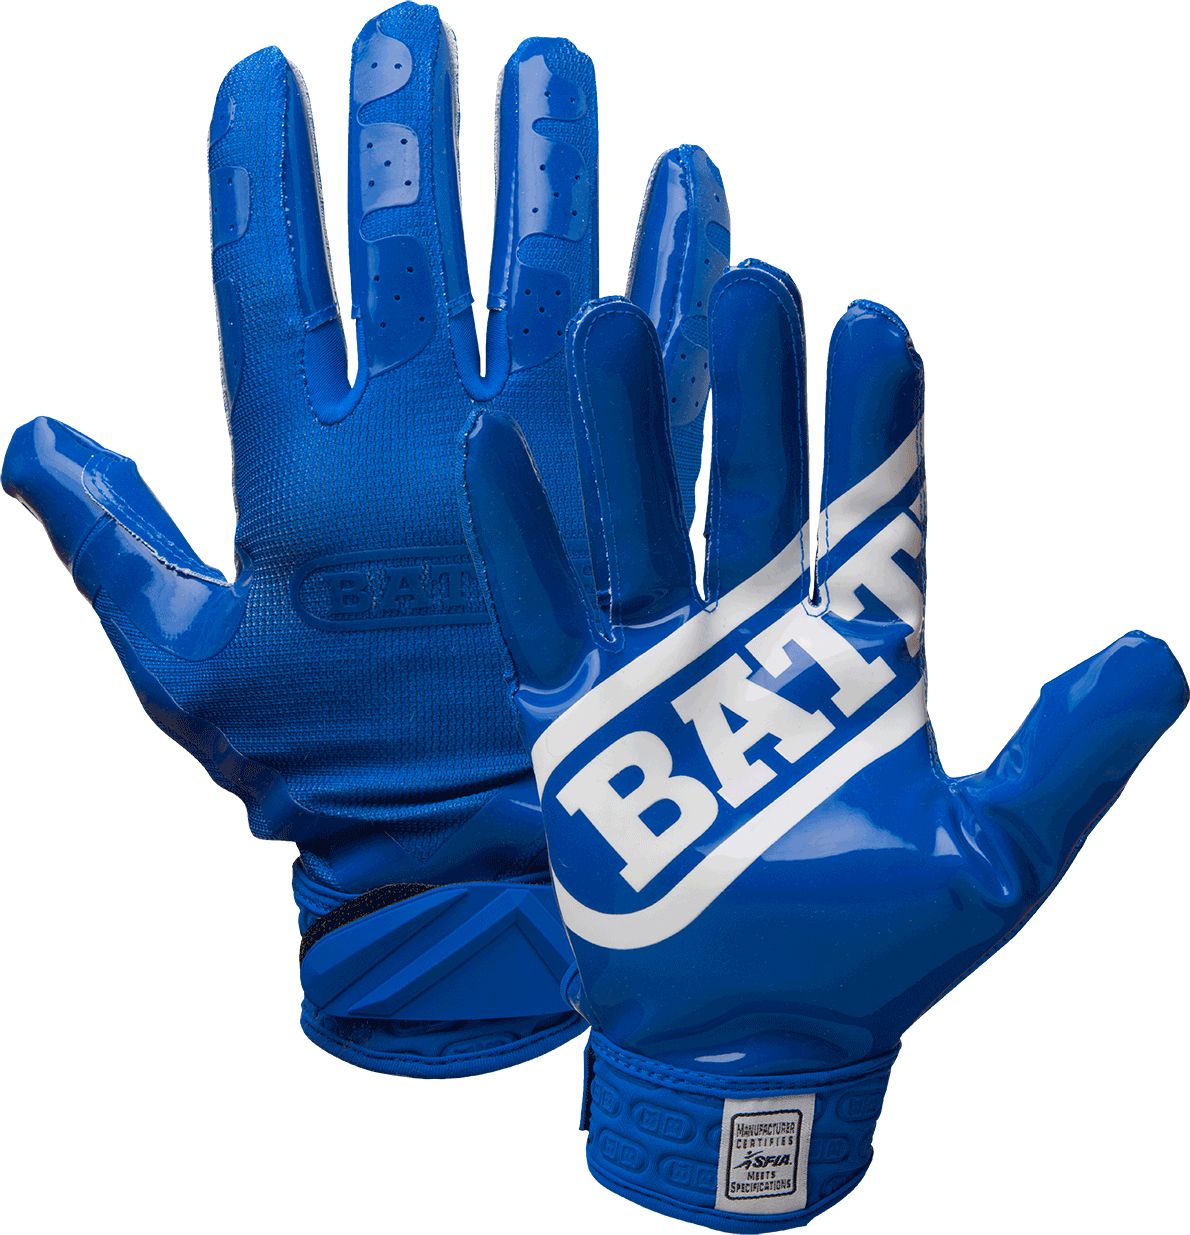 dicks football gloves